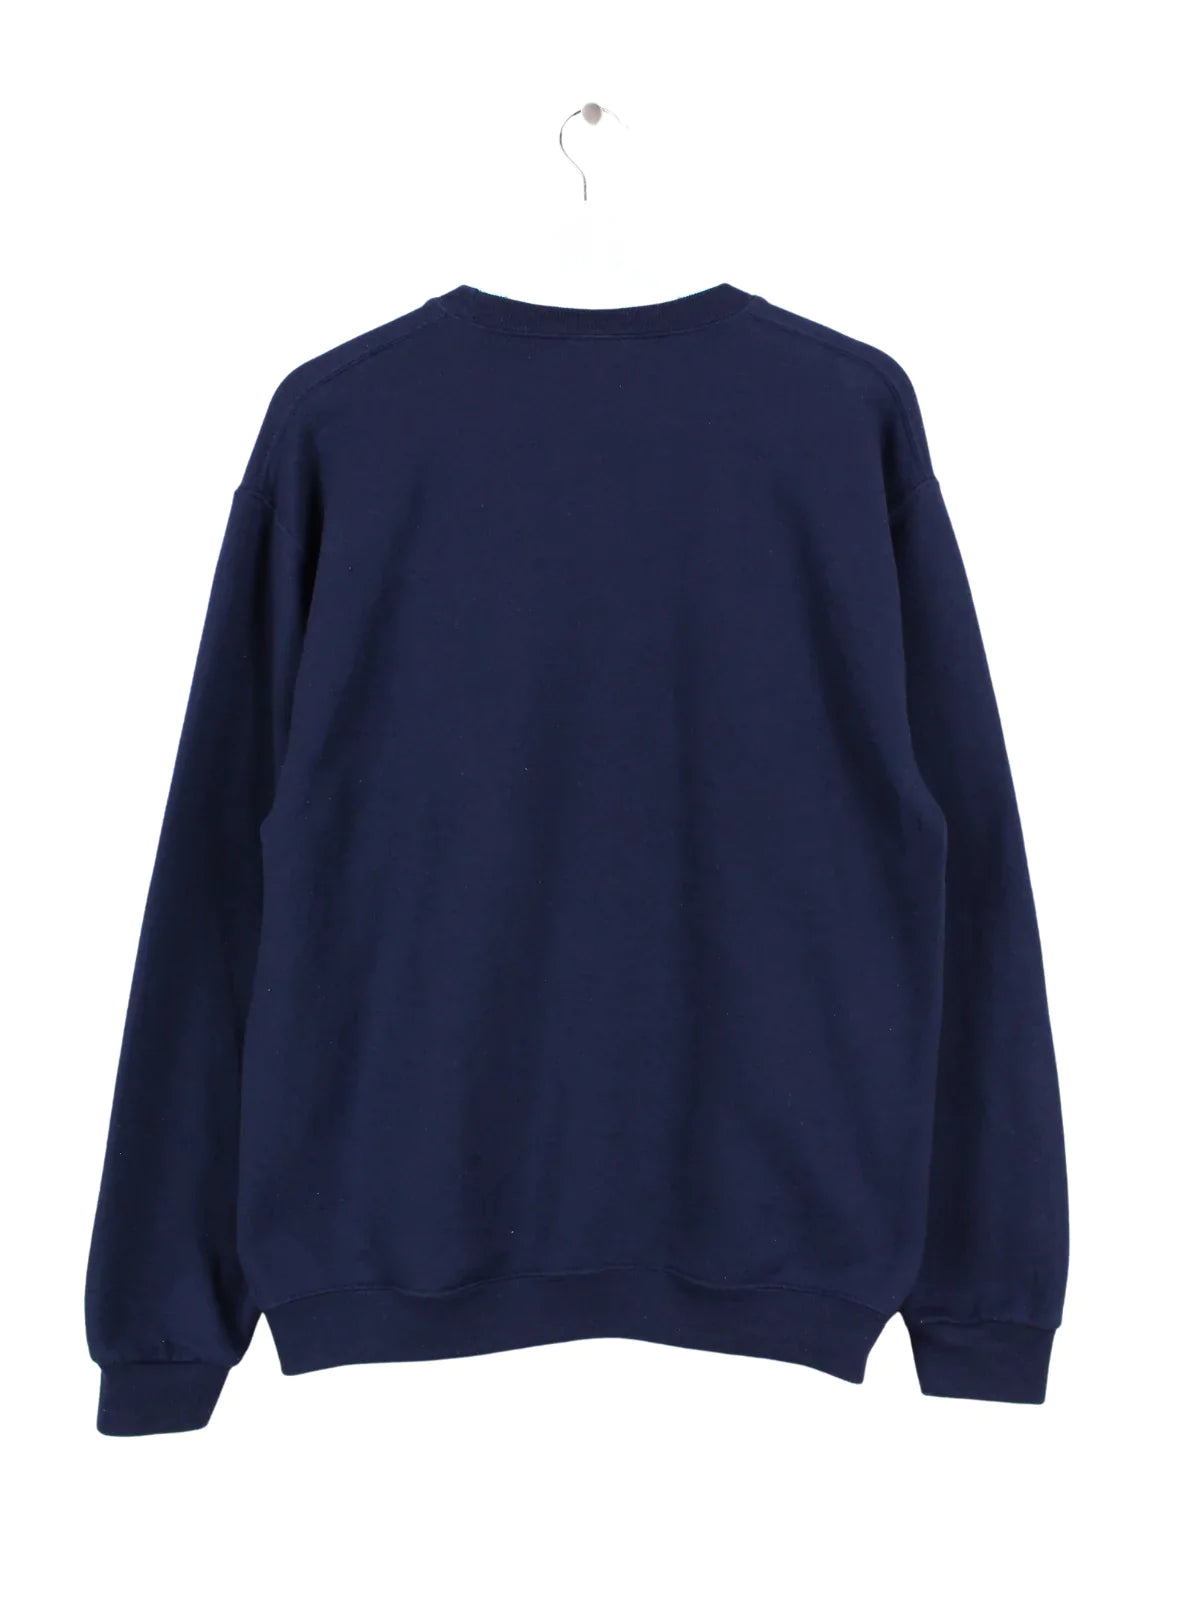 Jerzees Oklahoma Sweater Blau M